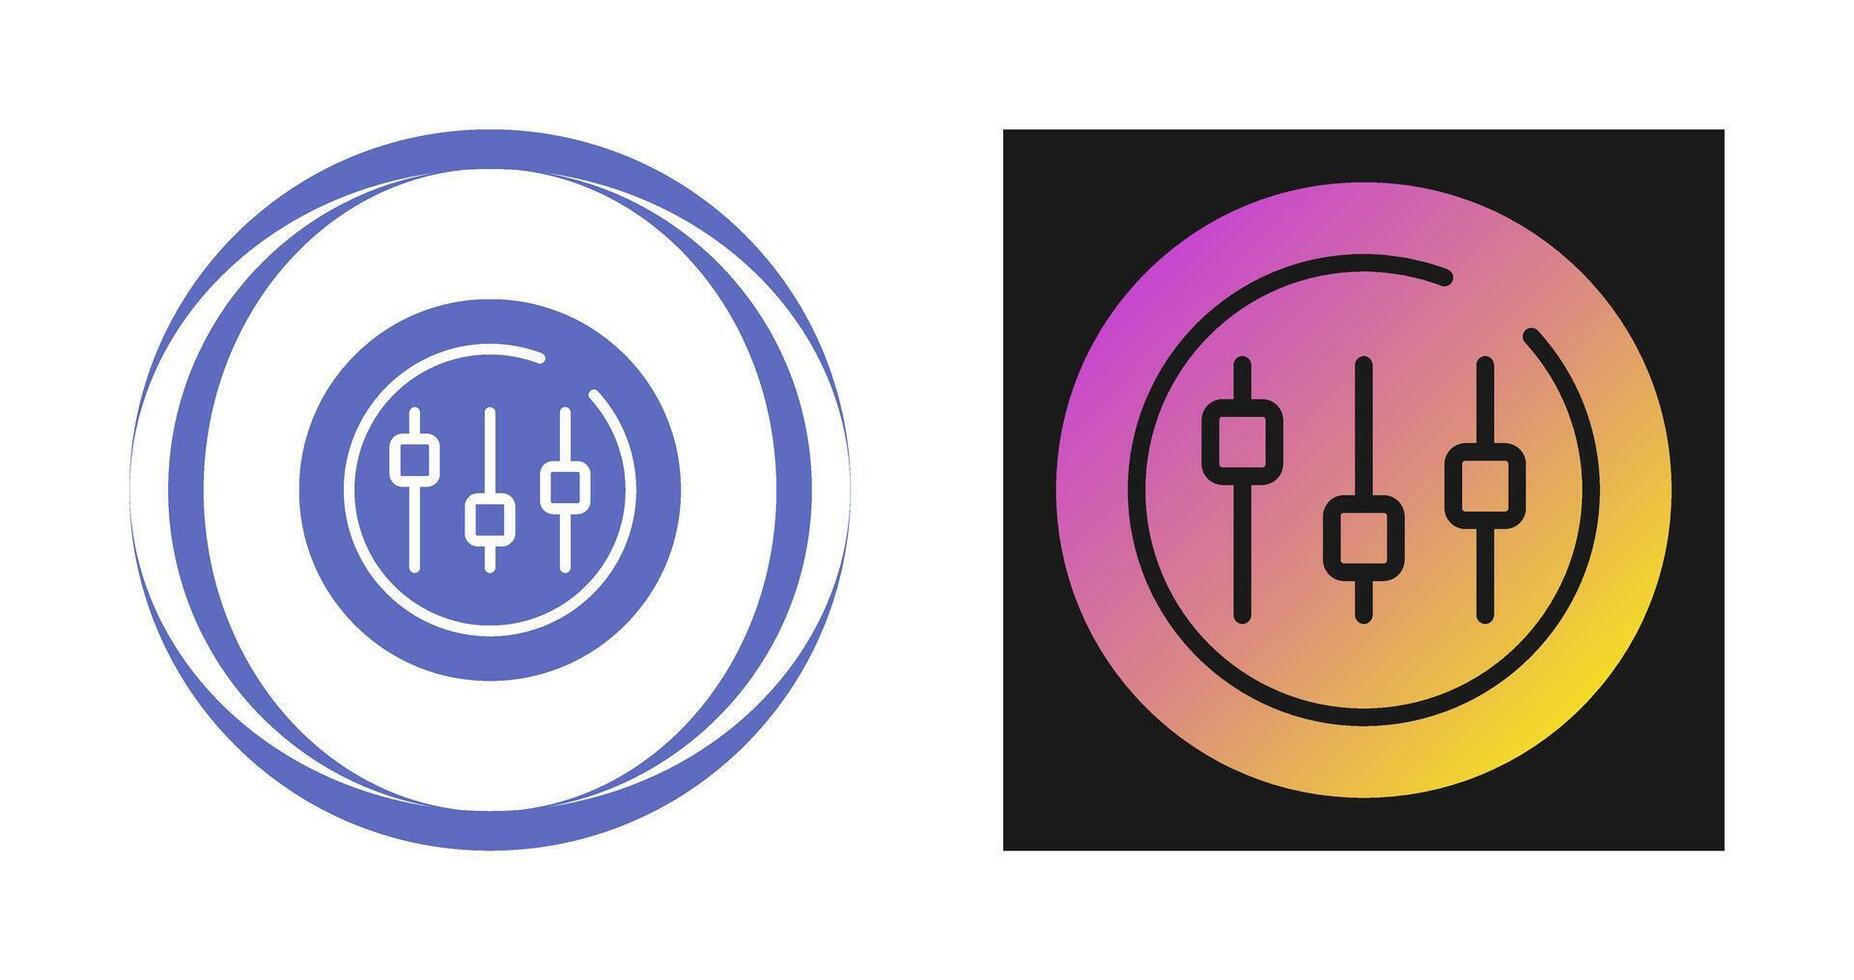 muziek- equalizer cirkel vector icoon